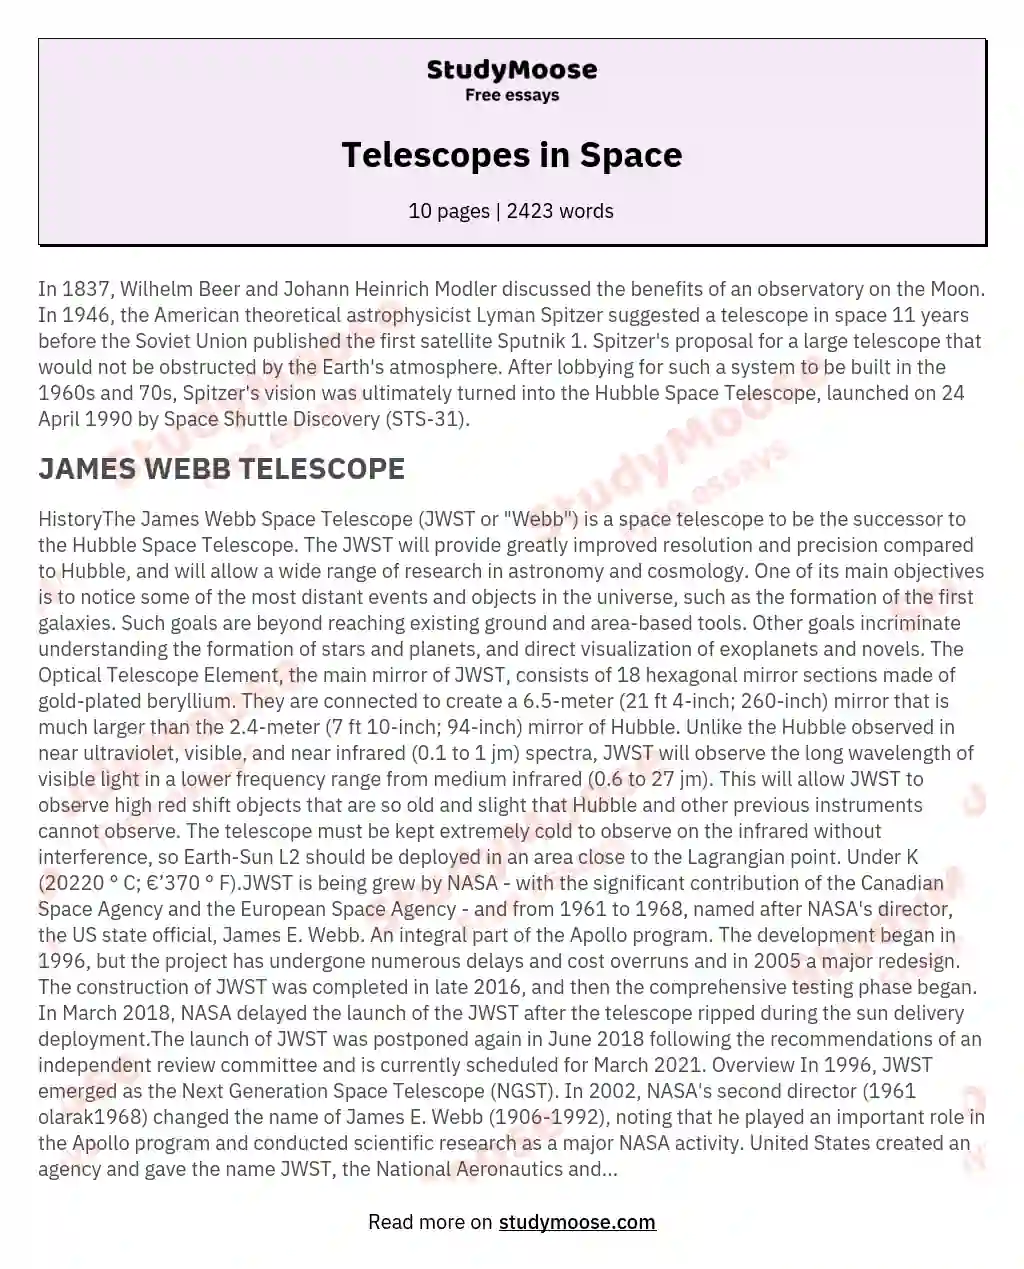 Telescopes in Space essay